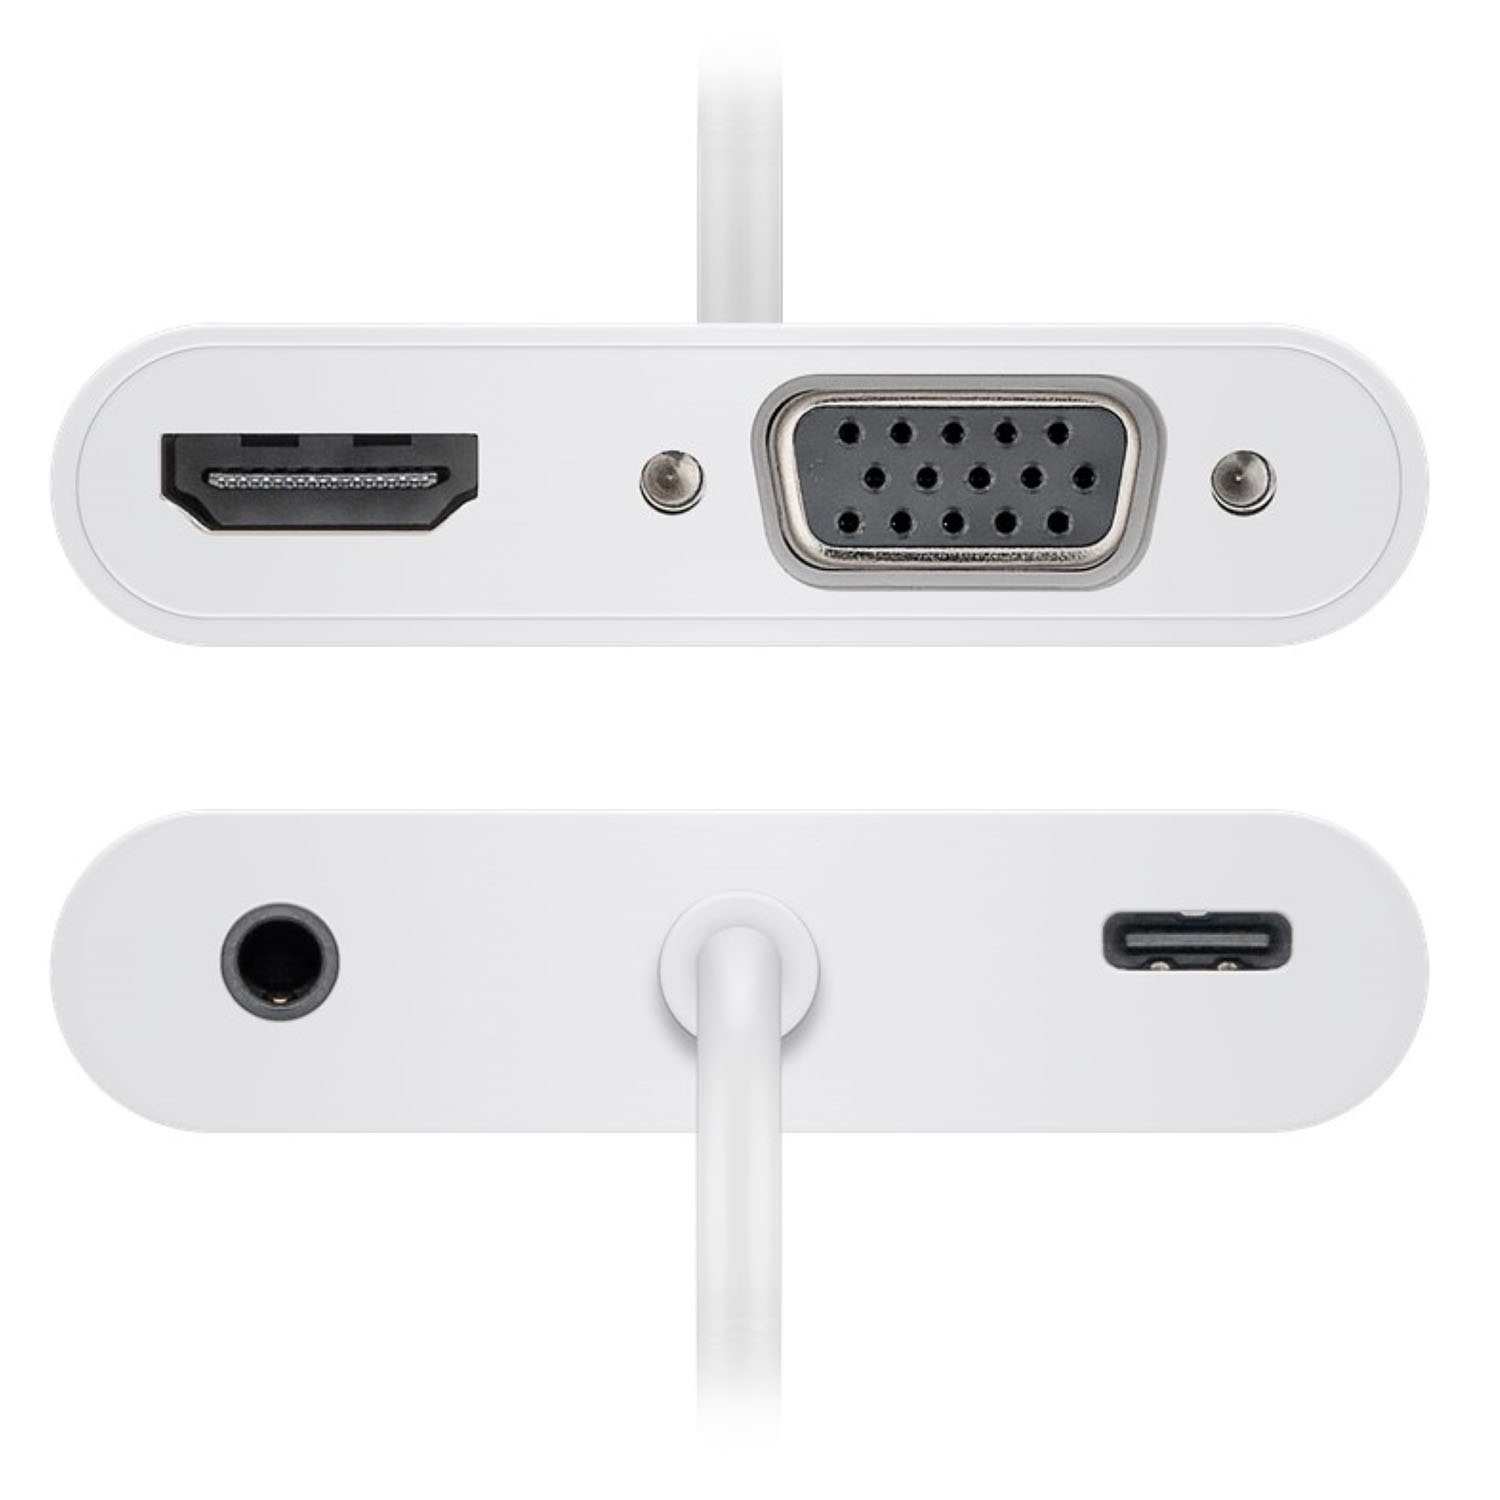 Hub, 52418 USB-C GOOBAY Multiport-Adapter, Weiß